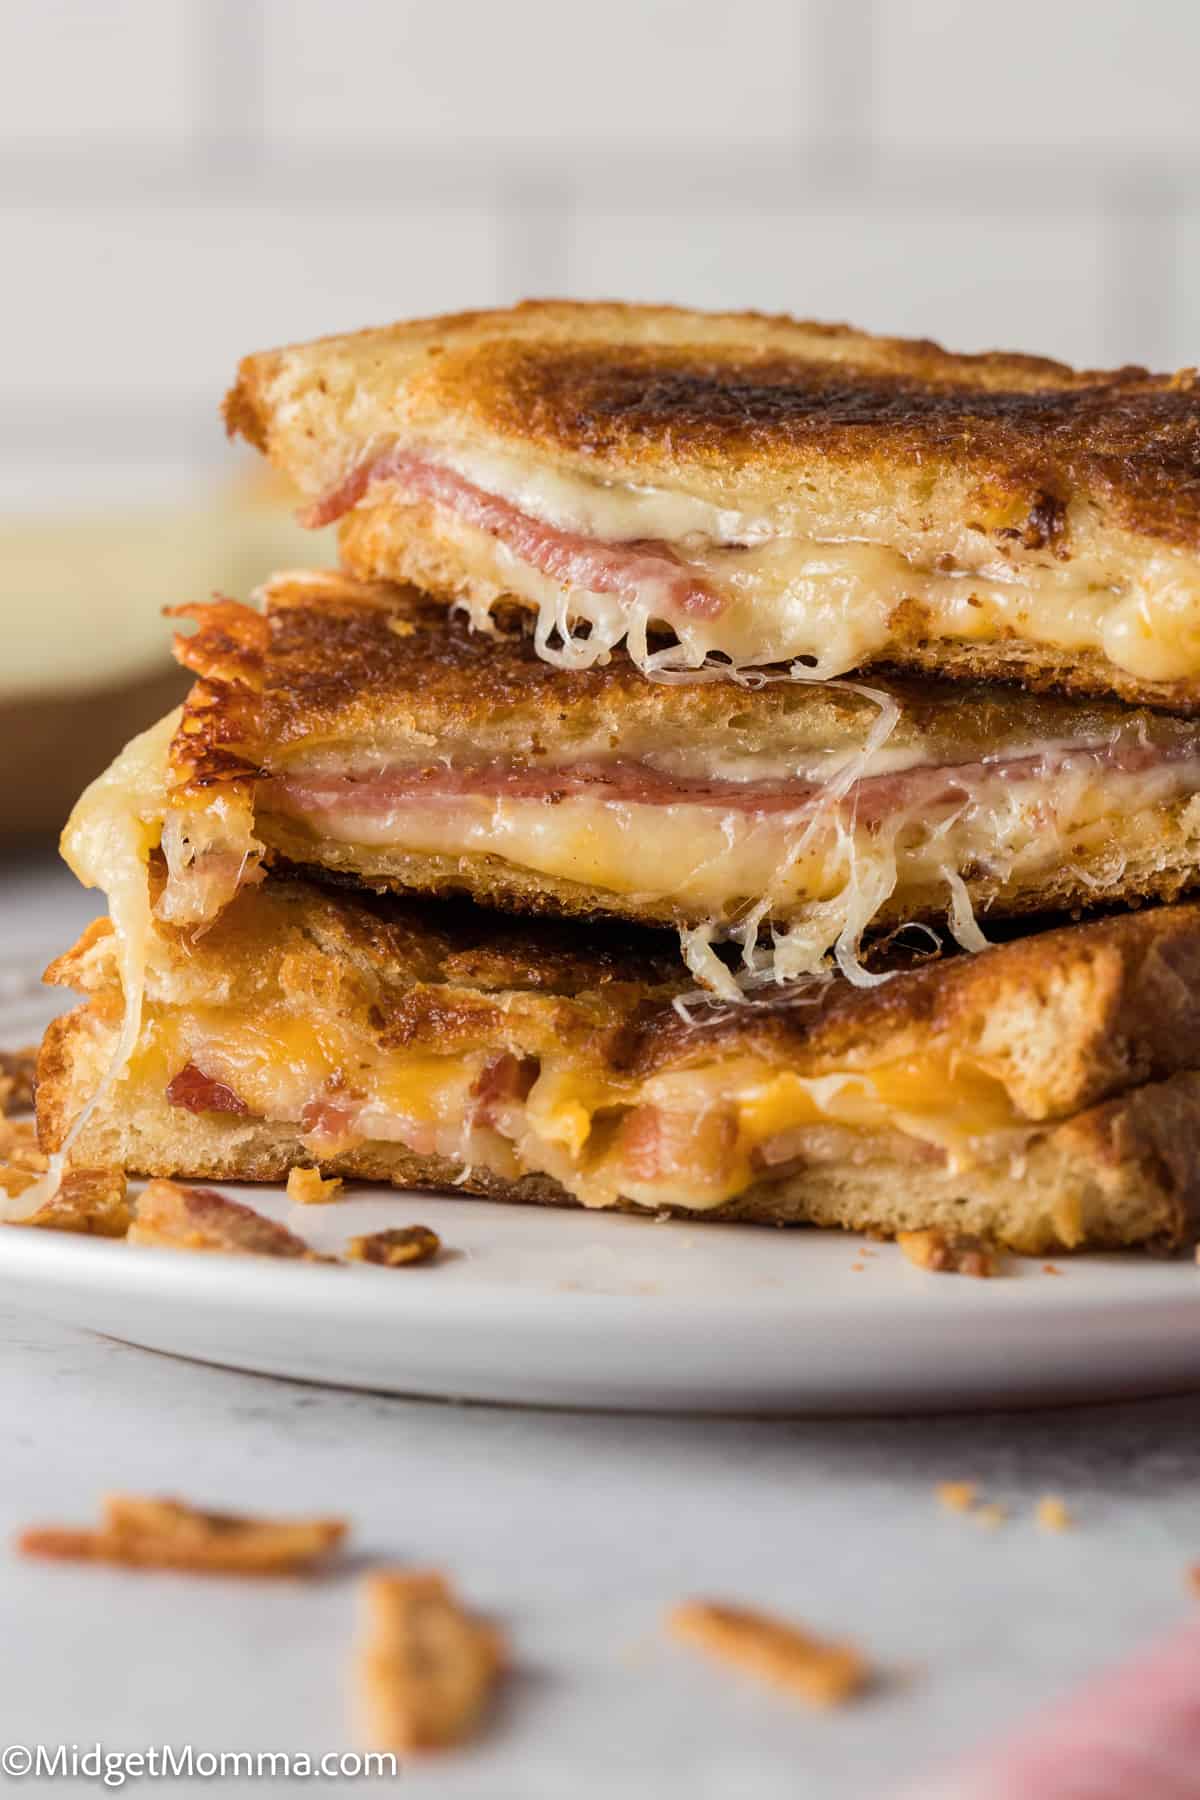 https://www.midgetmomma.com/wp-content/uploads/2023/01/Bacon-Grilled-Cheese-Sandwich-Recipe-22.jpg